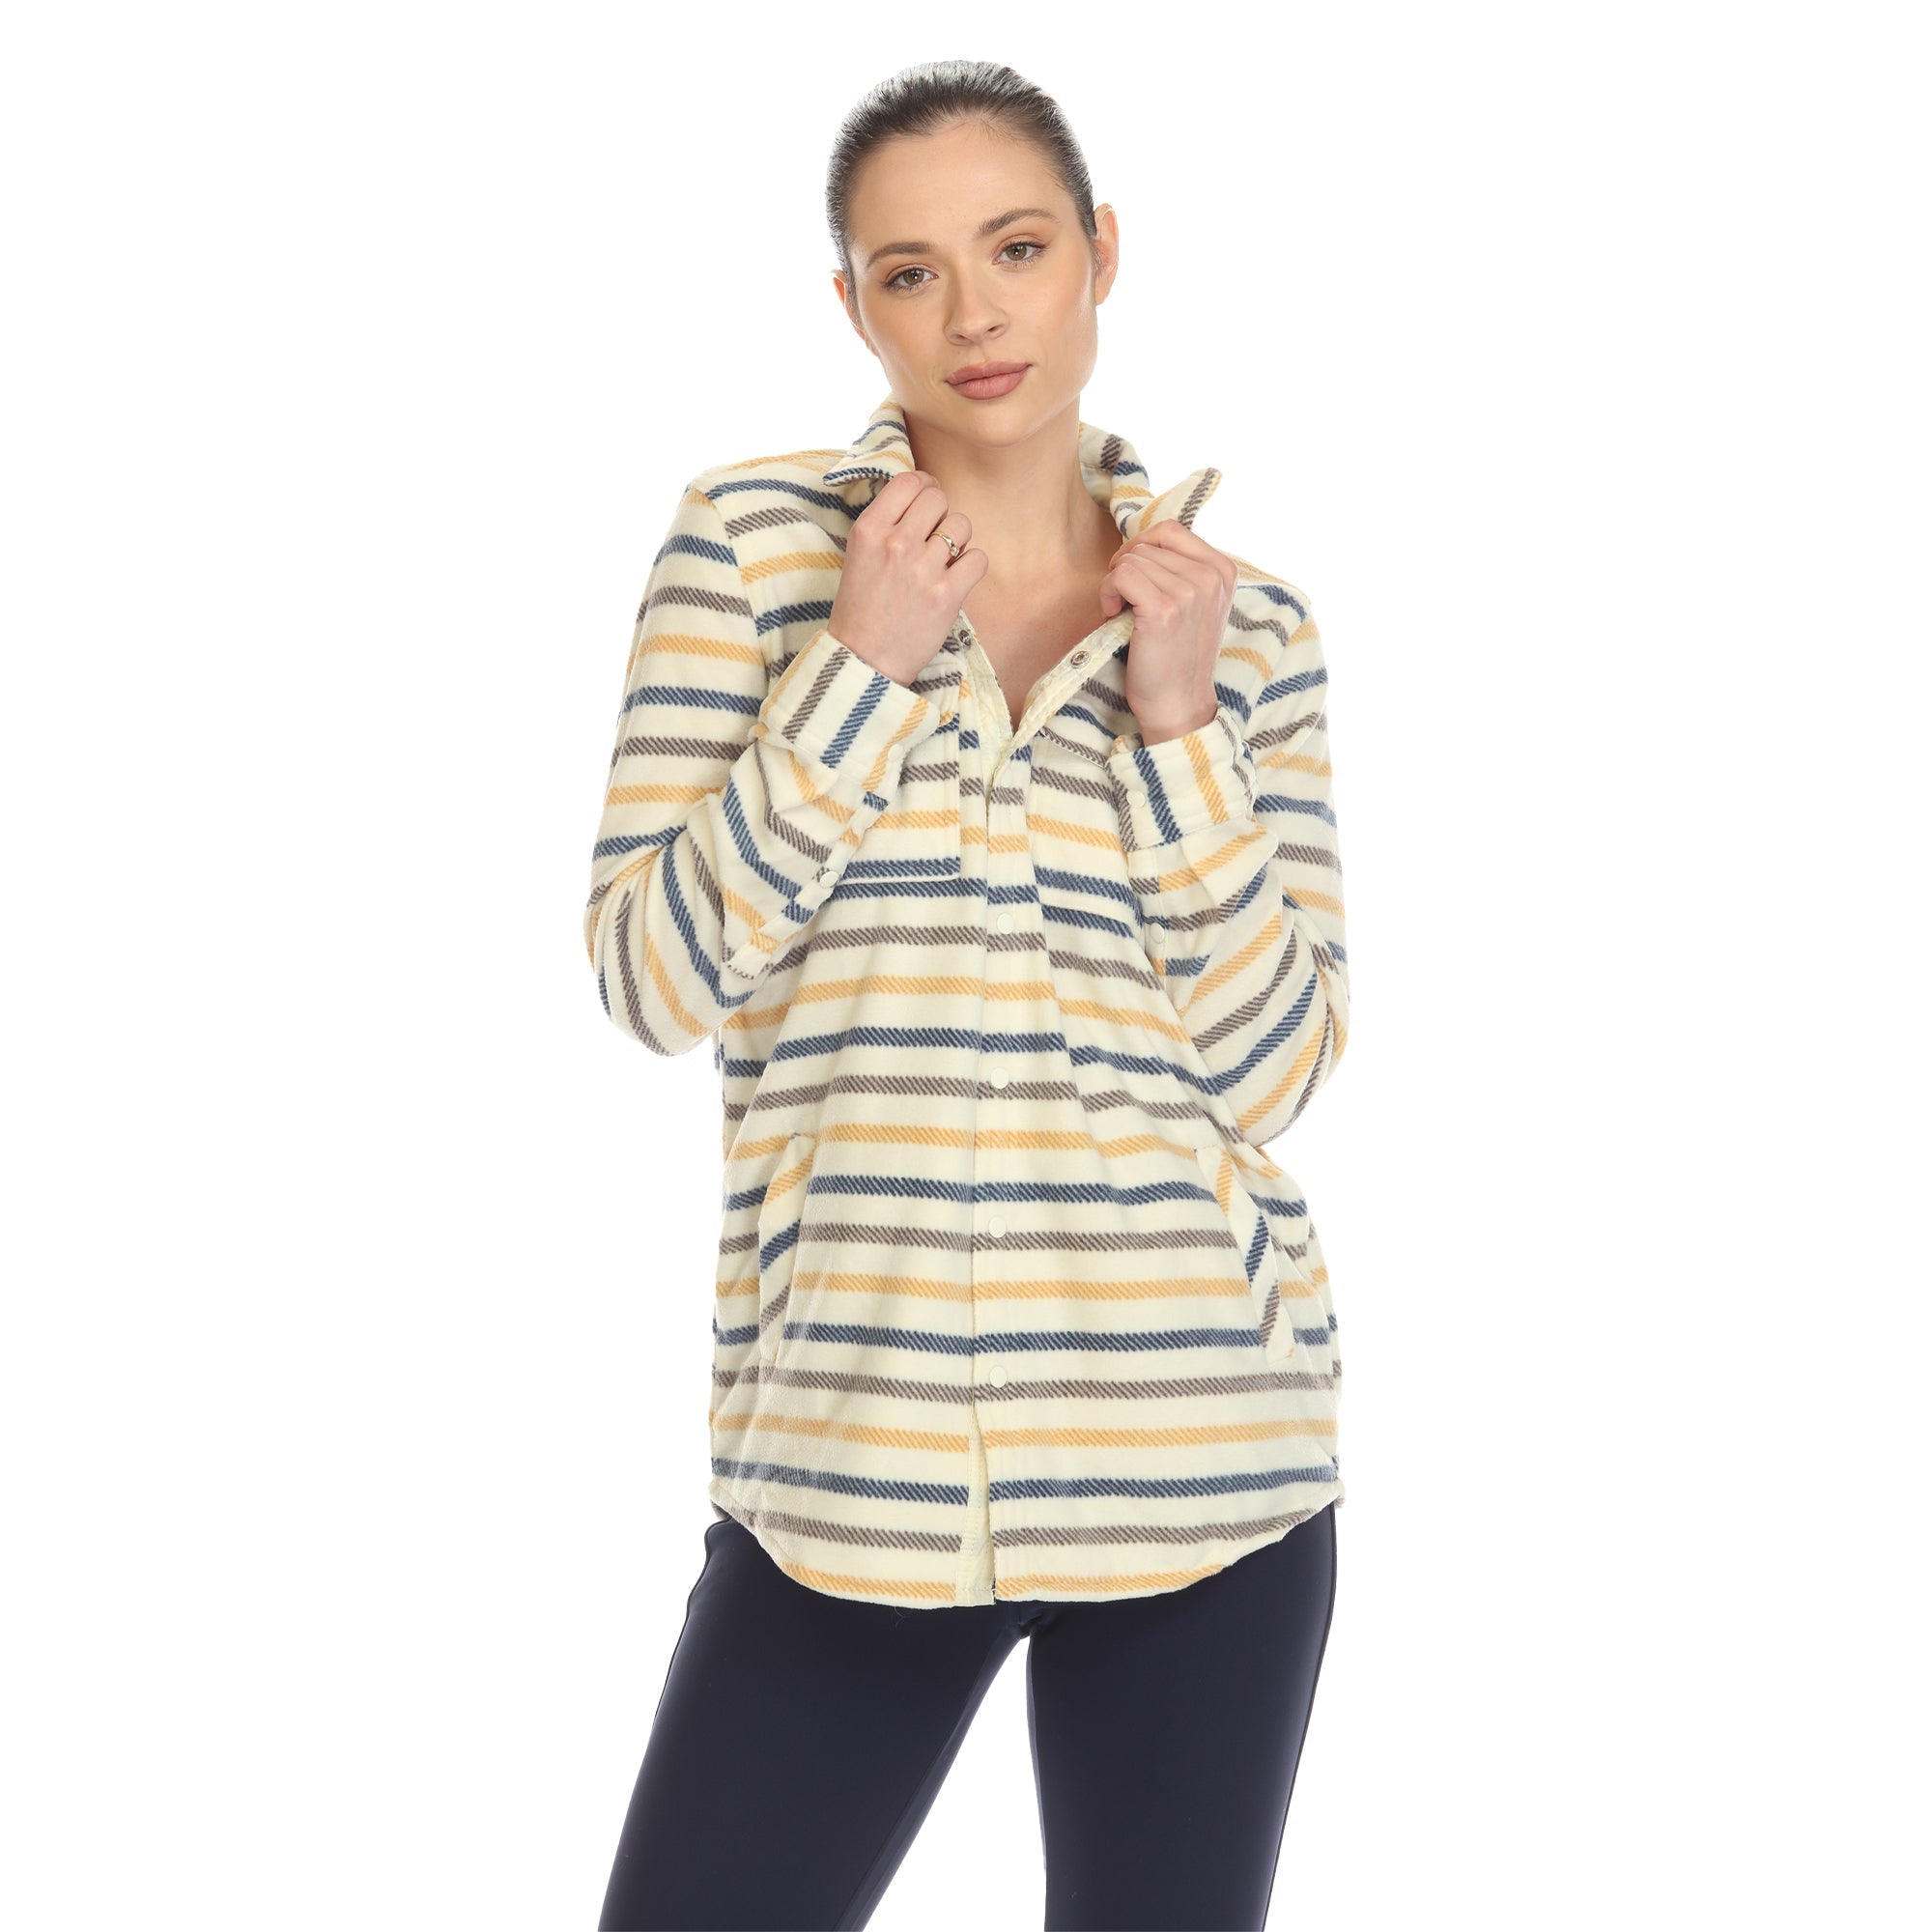 Women's Flannel Plaid Shirts - DressbarnShirts & Blouses